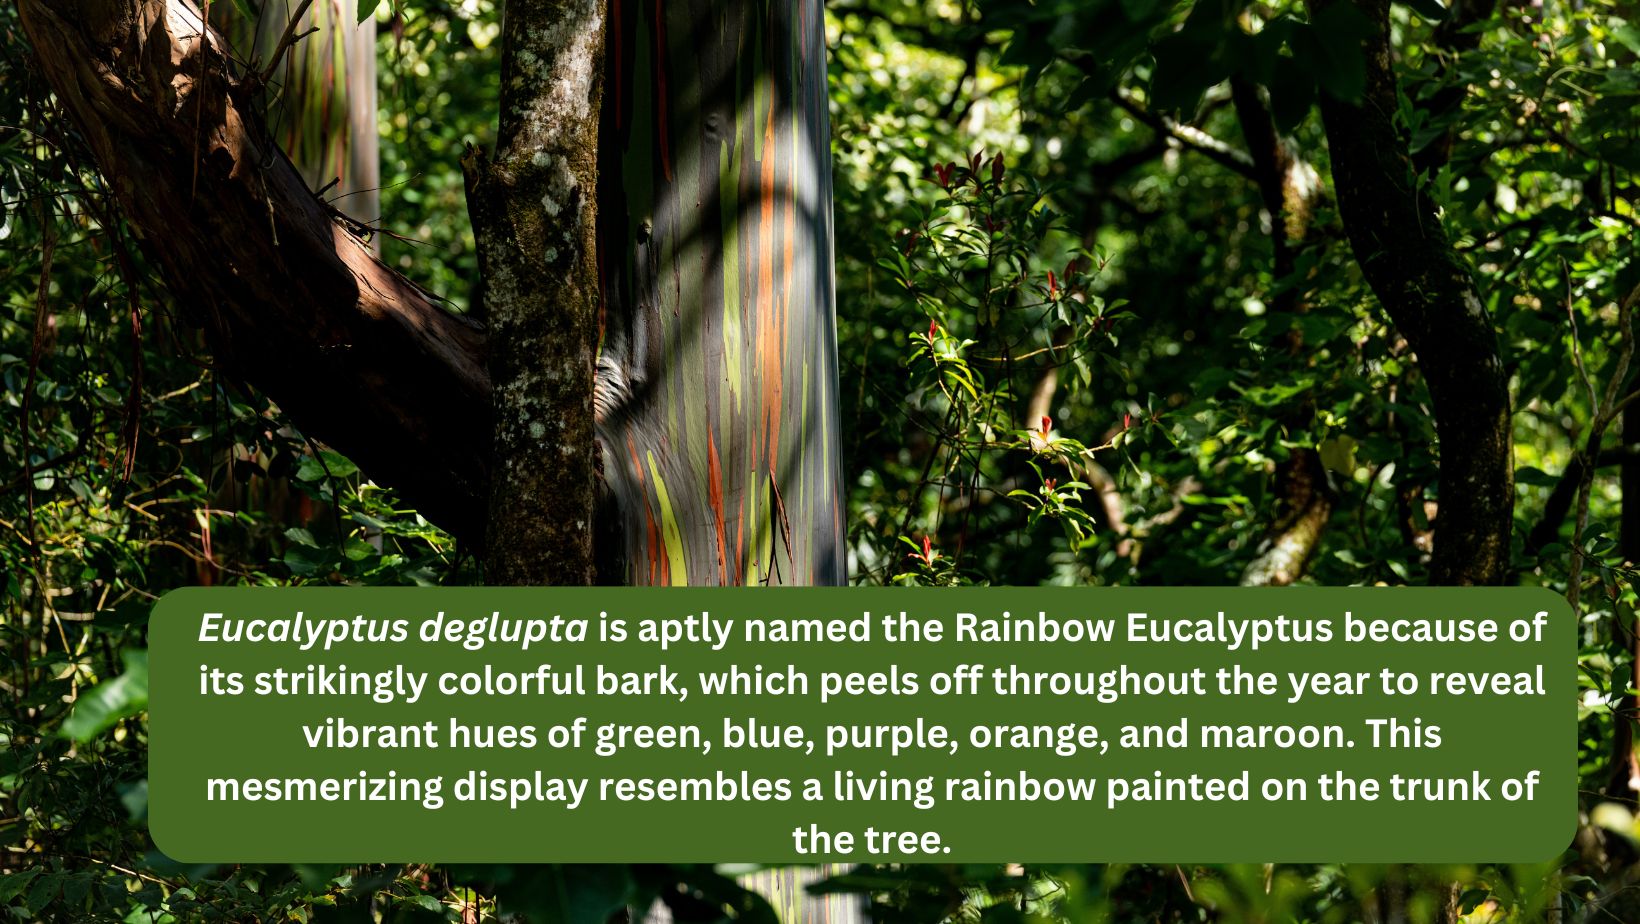 Nature’s own paintbrush strokes a living rainbow on this-Eucalyptus deglapta